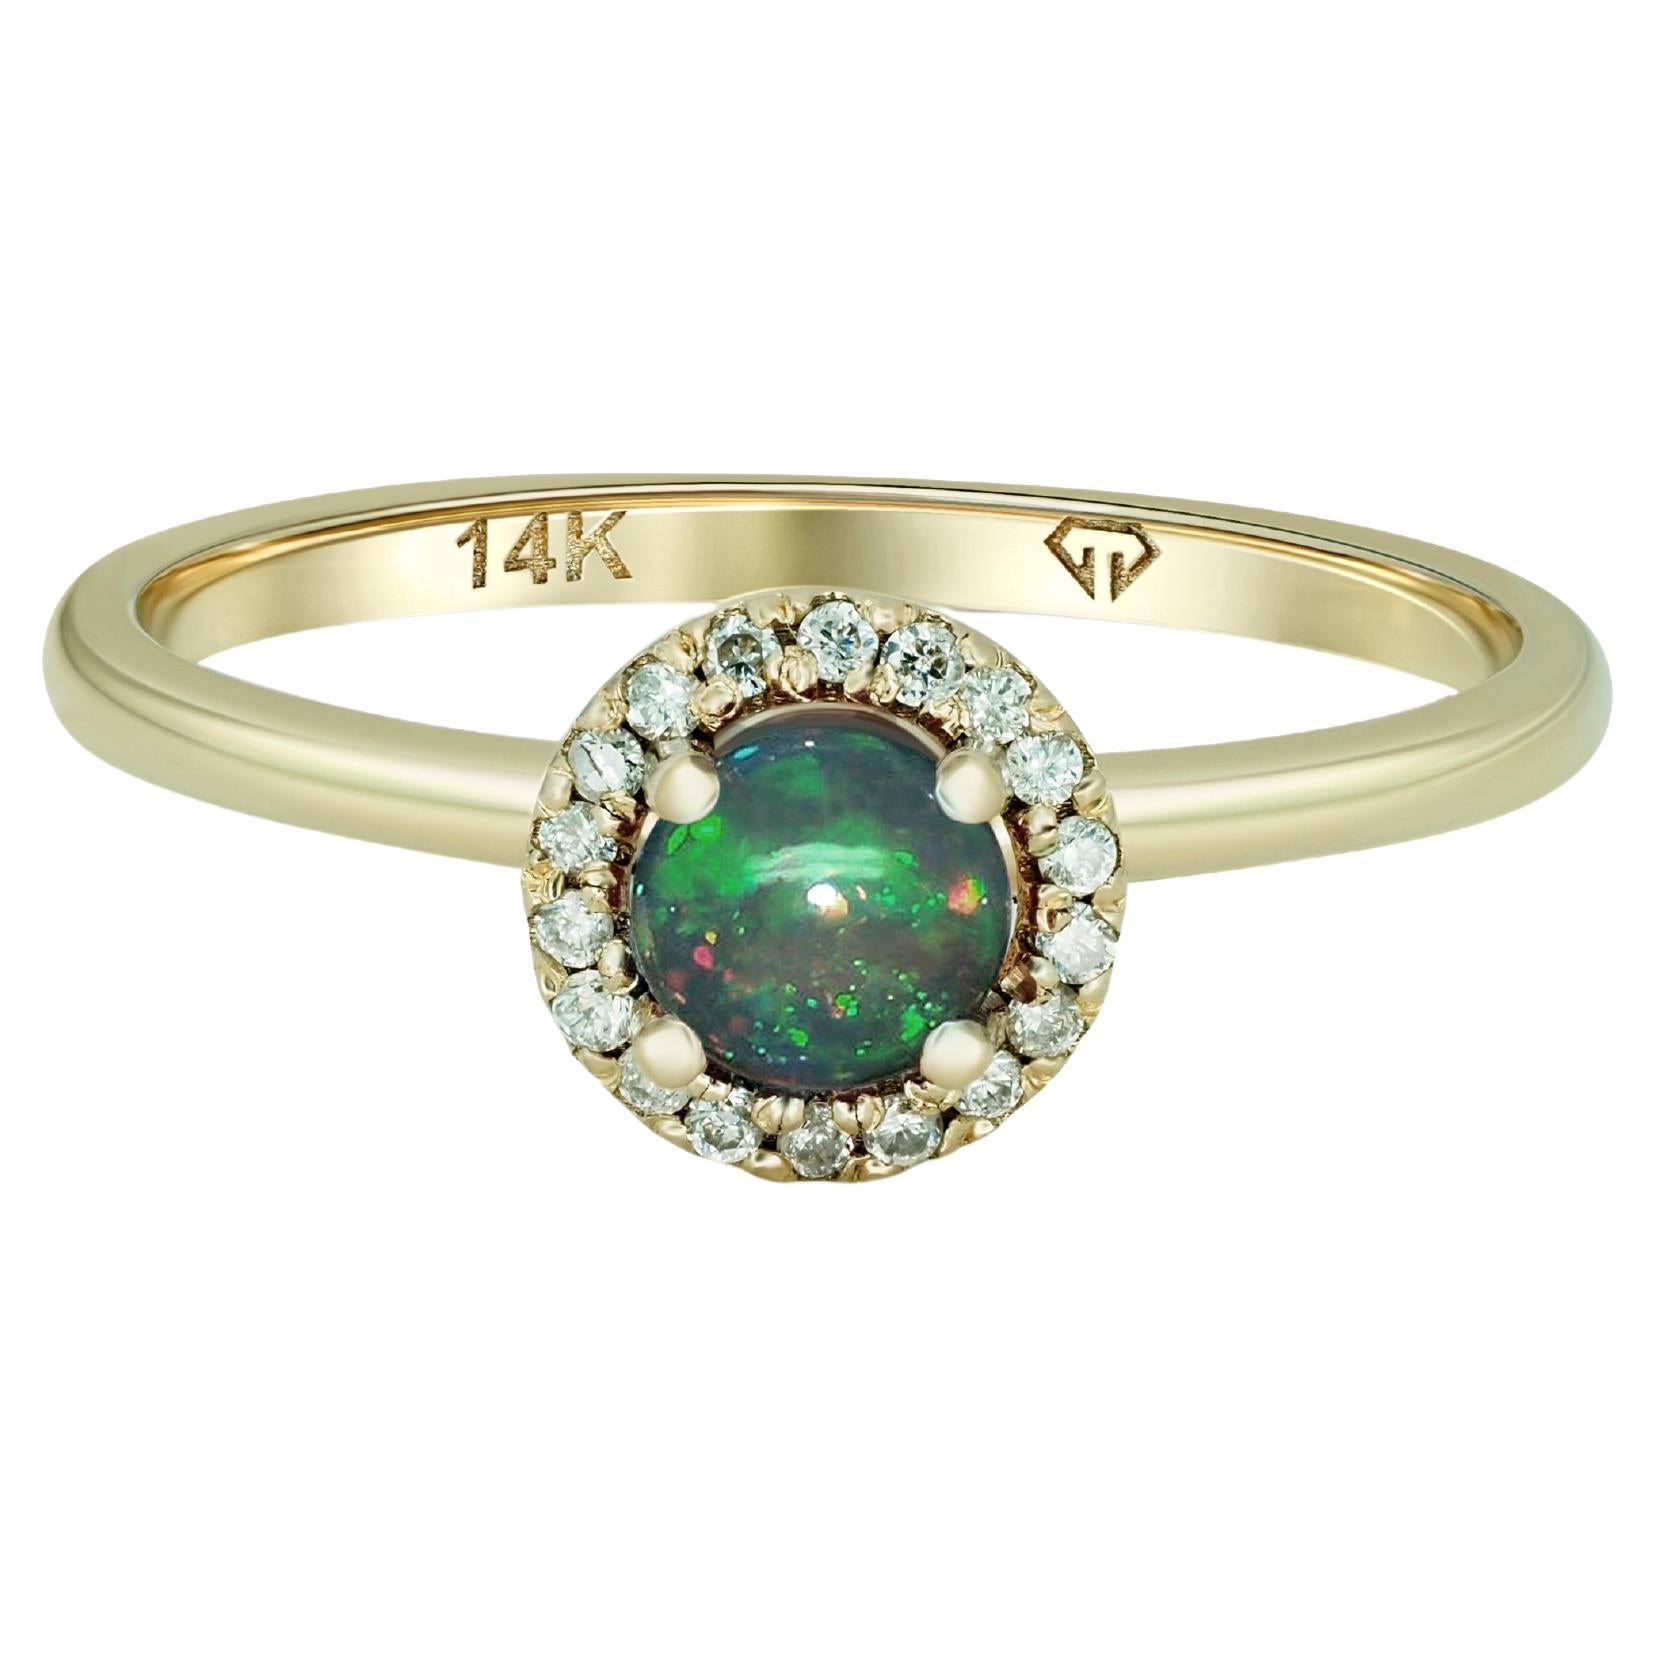 Diamond Halo Opal Ring in 14k Gold. 